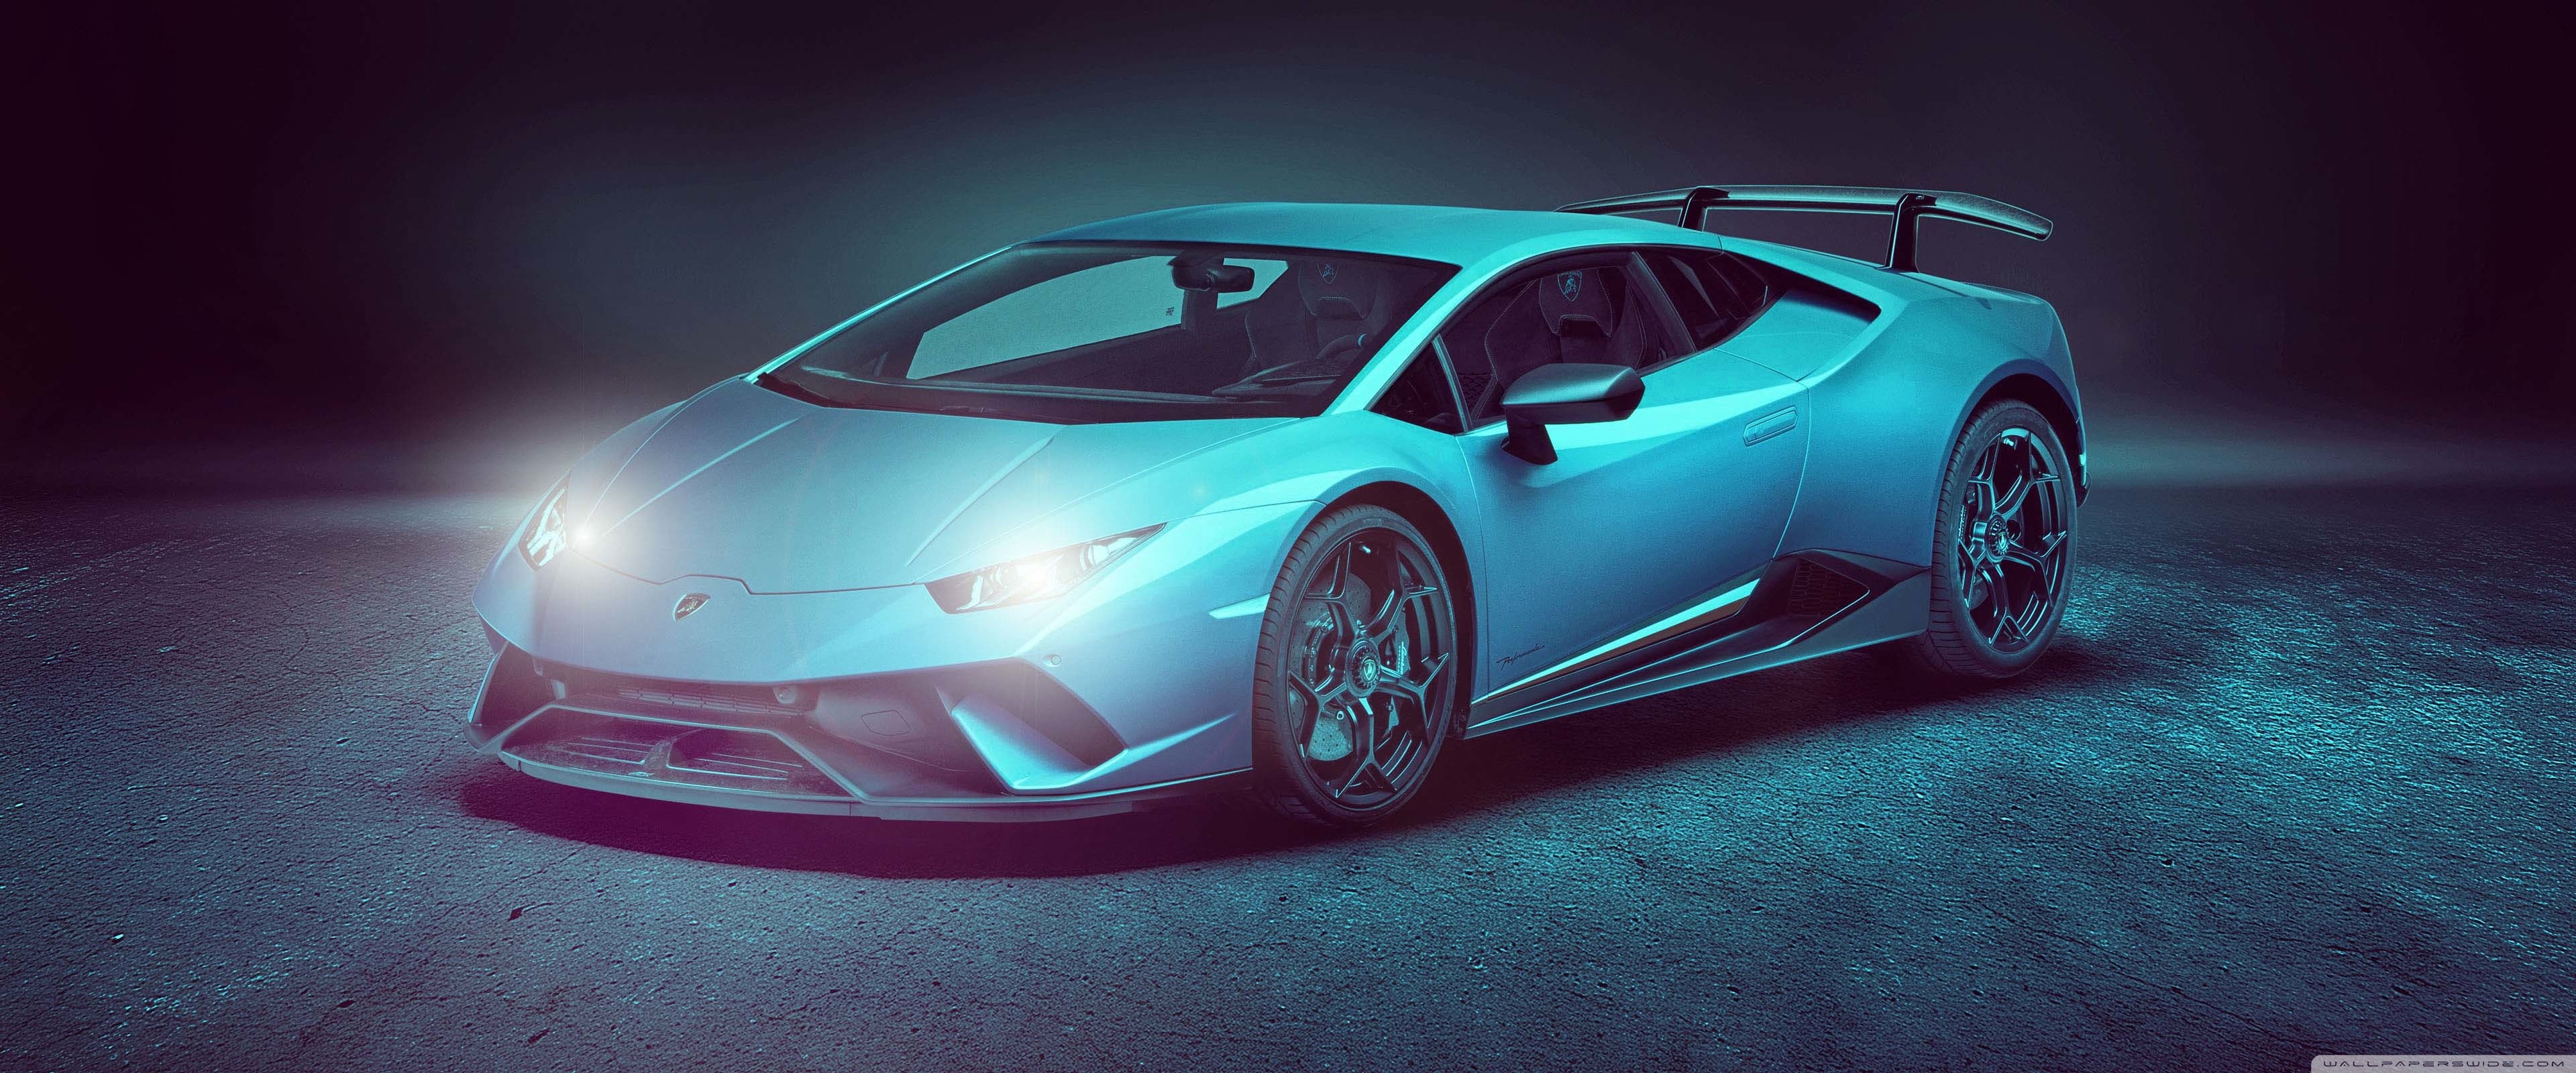 Lamborghini Car Ultra HD Desktop Background Wallpaper For